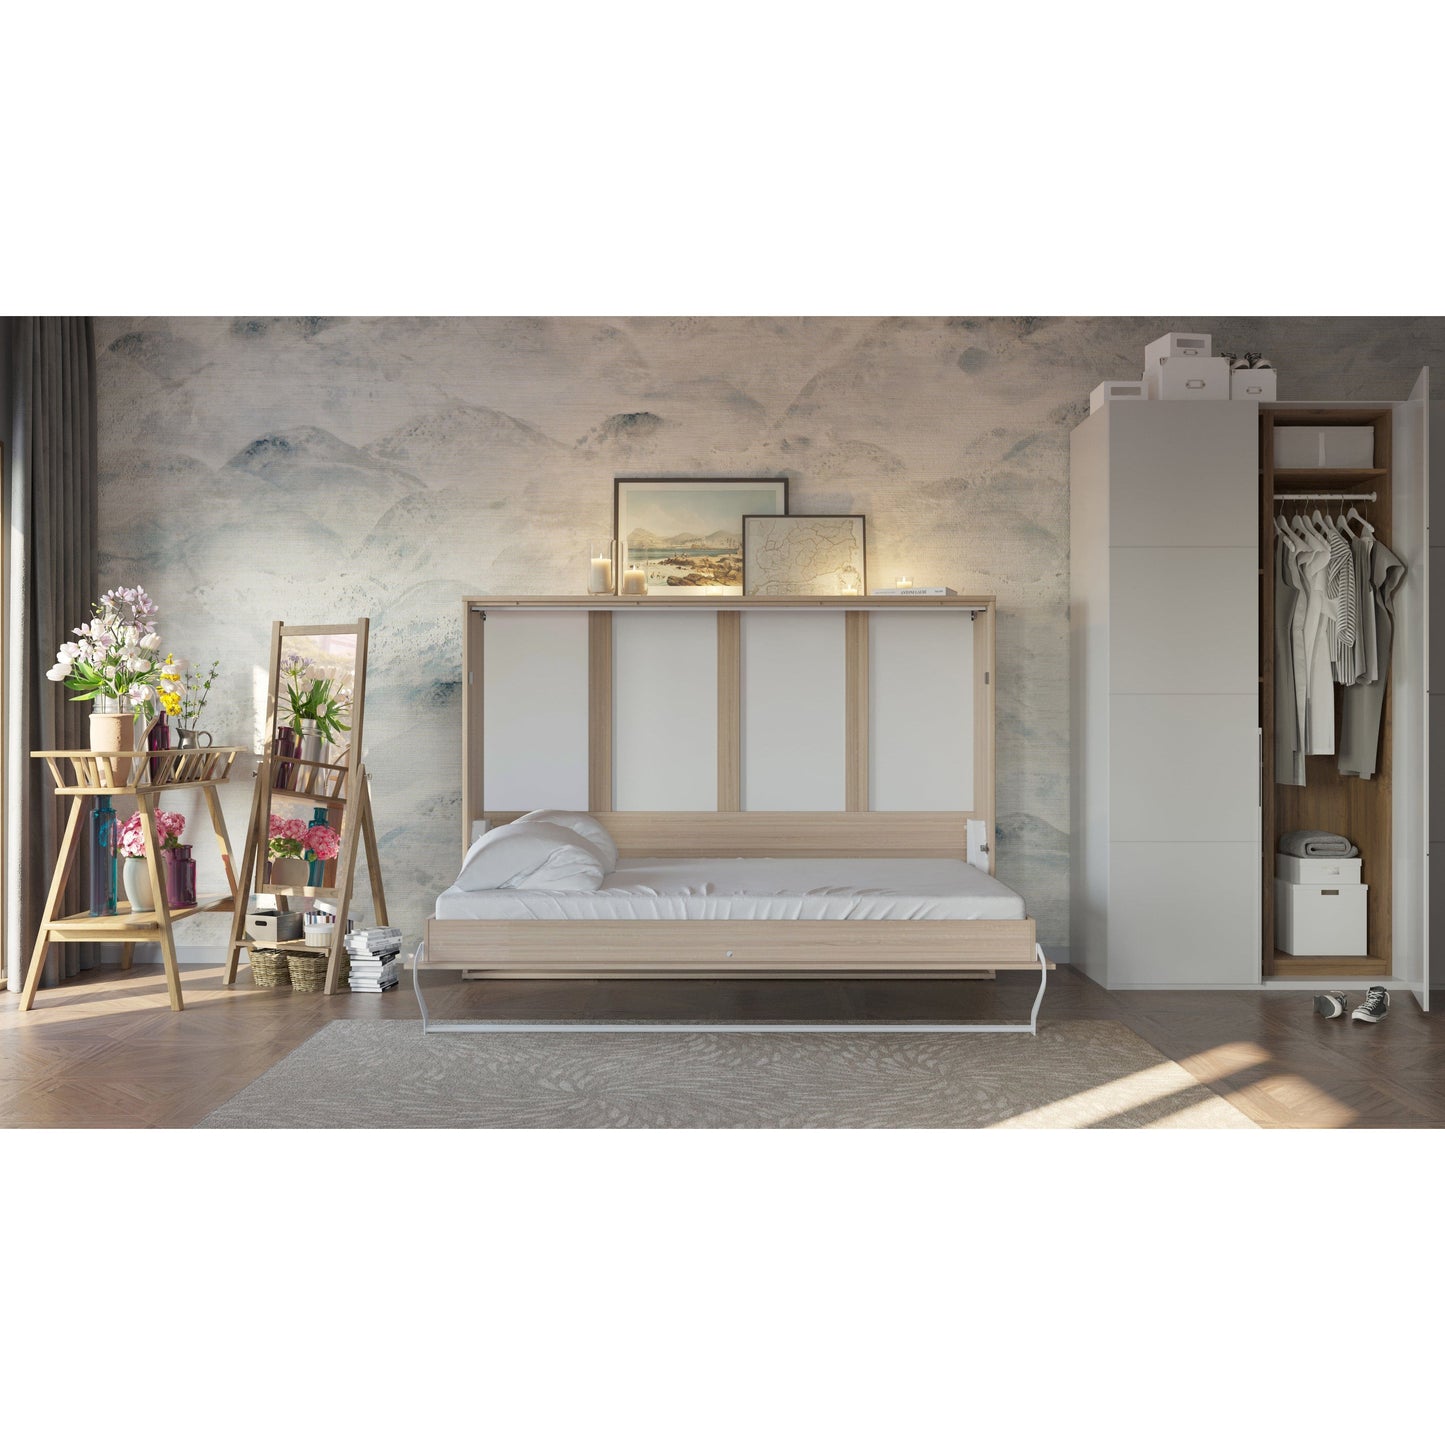 MaximaHouse European Horizontal Full XL Size Murphy Bed Brescia with mattress